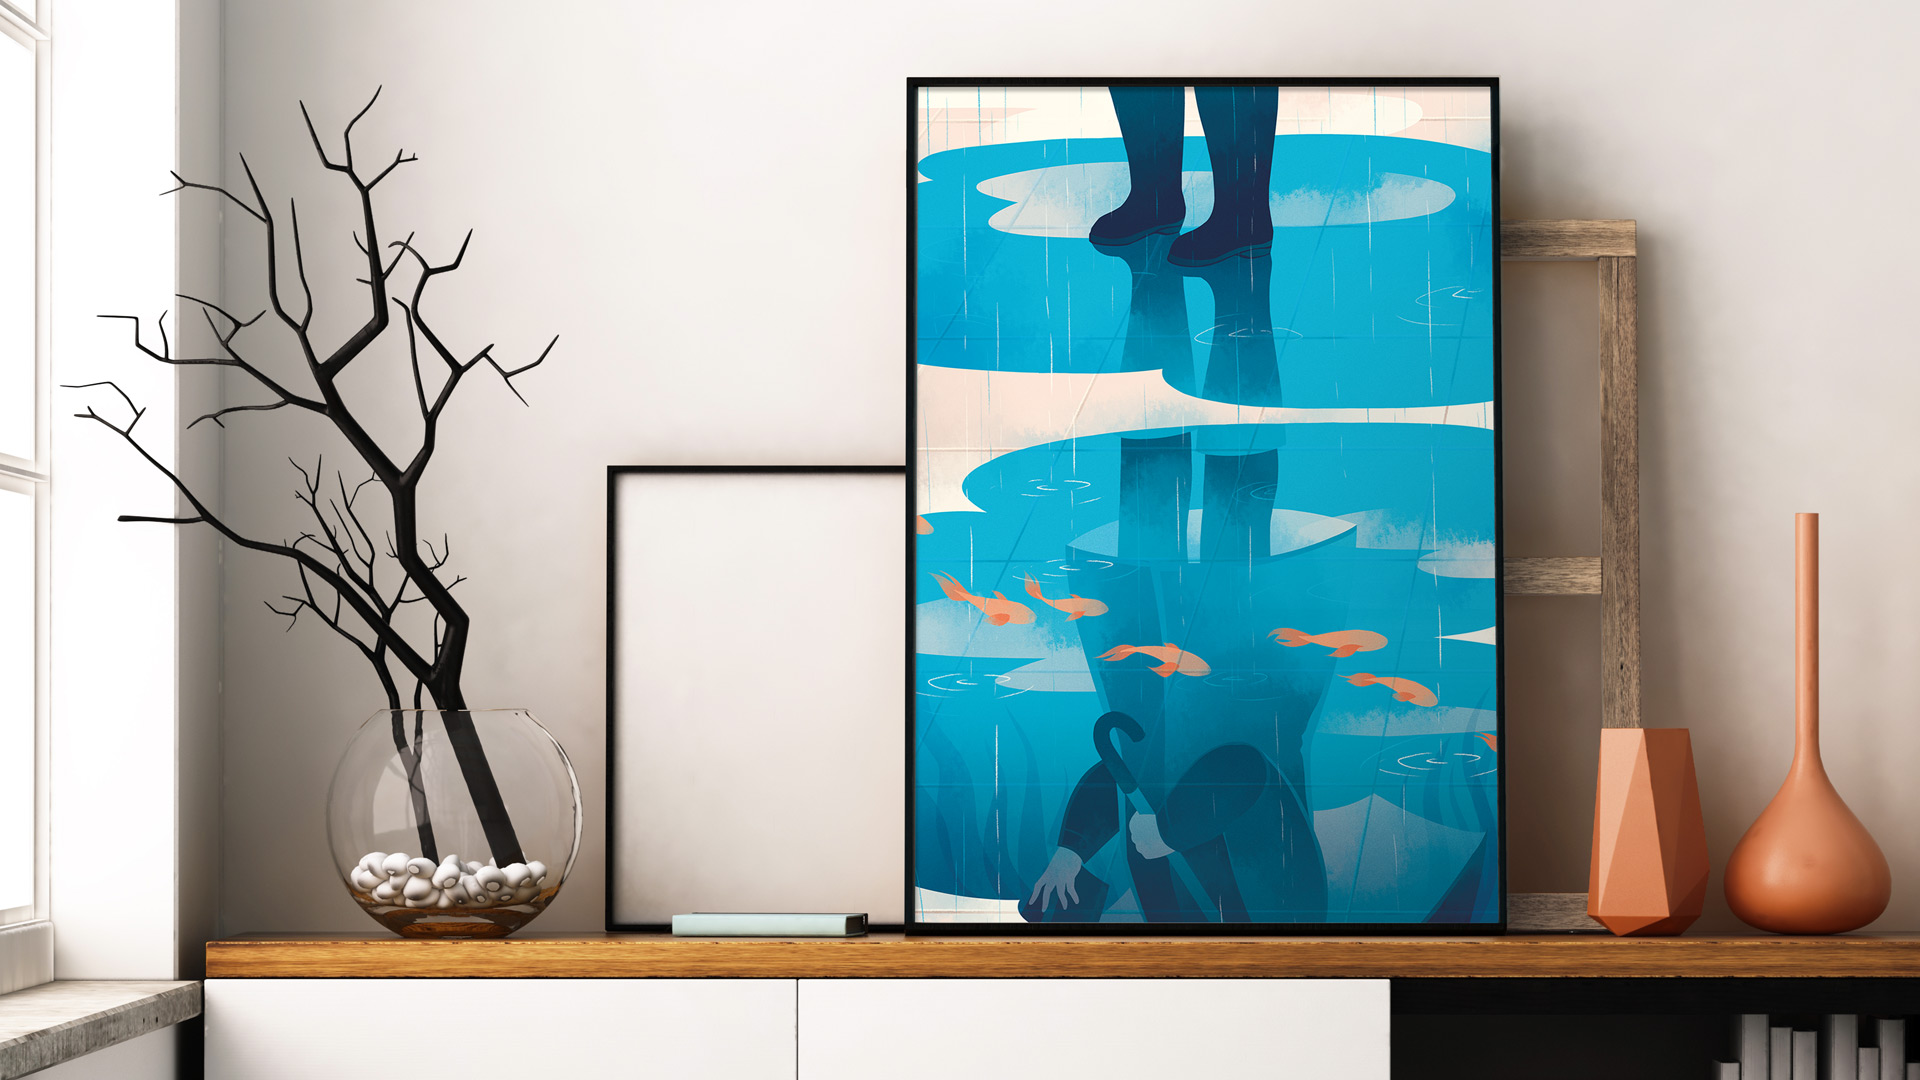 Alice Zeng | Illustration | 2016 Reflection Poster Show, Theme: Water, Illustration